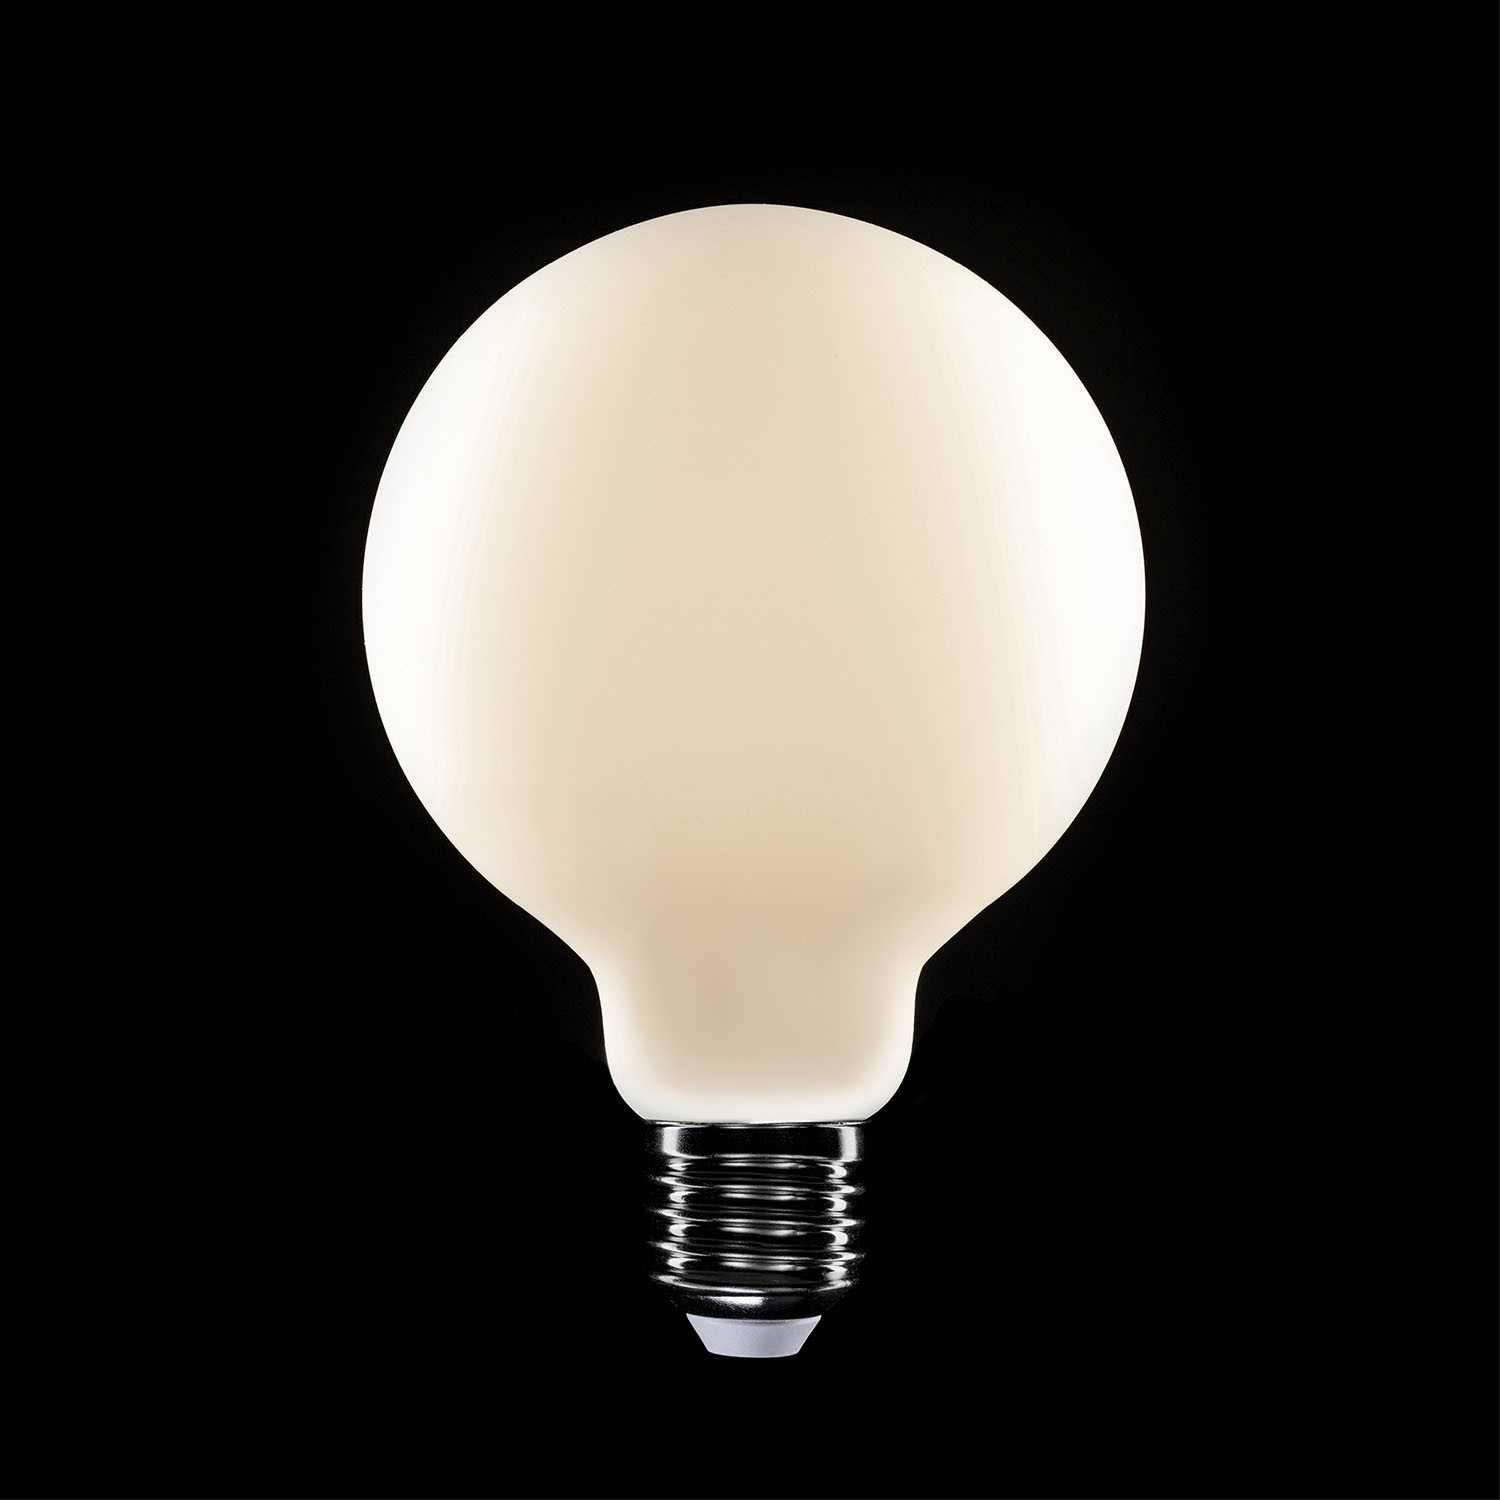 LED lamp E27 CRI 95 G95 7W 2700K Dimbaar - P03